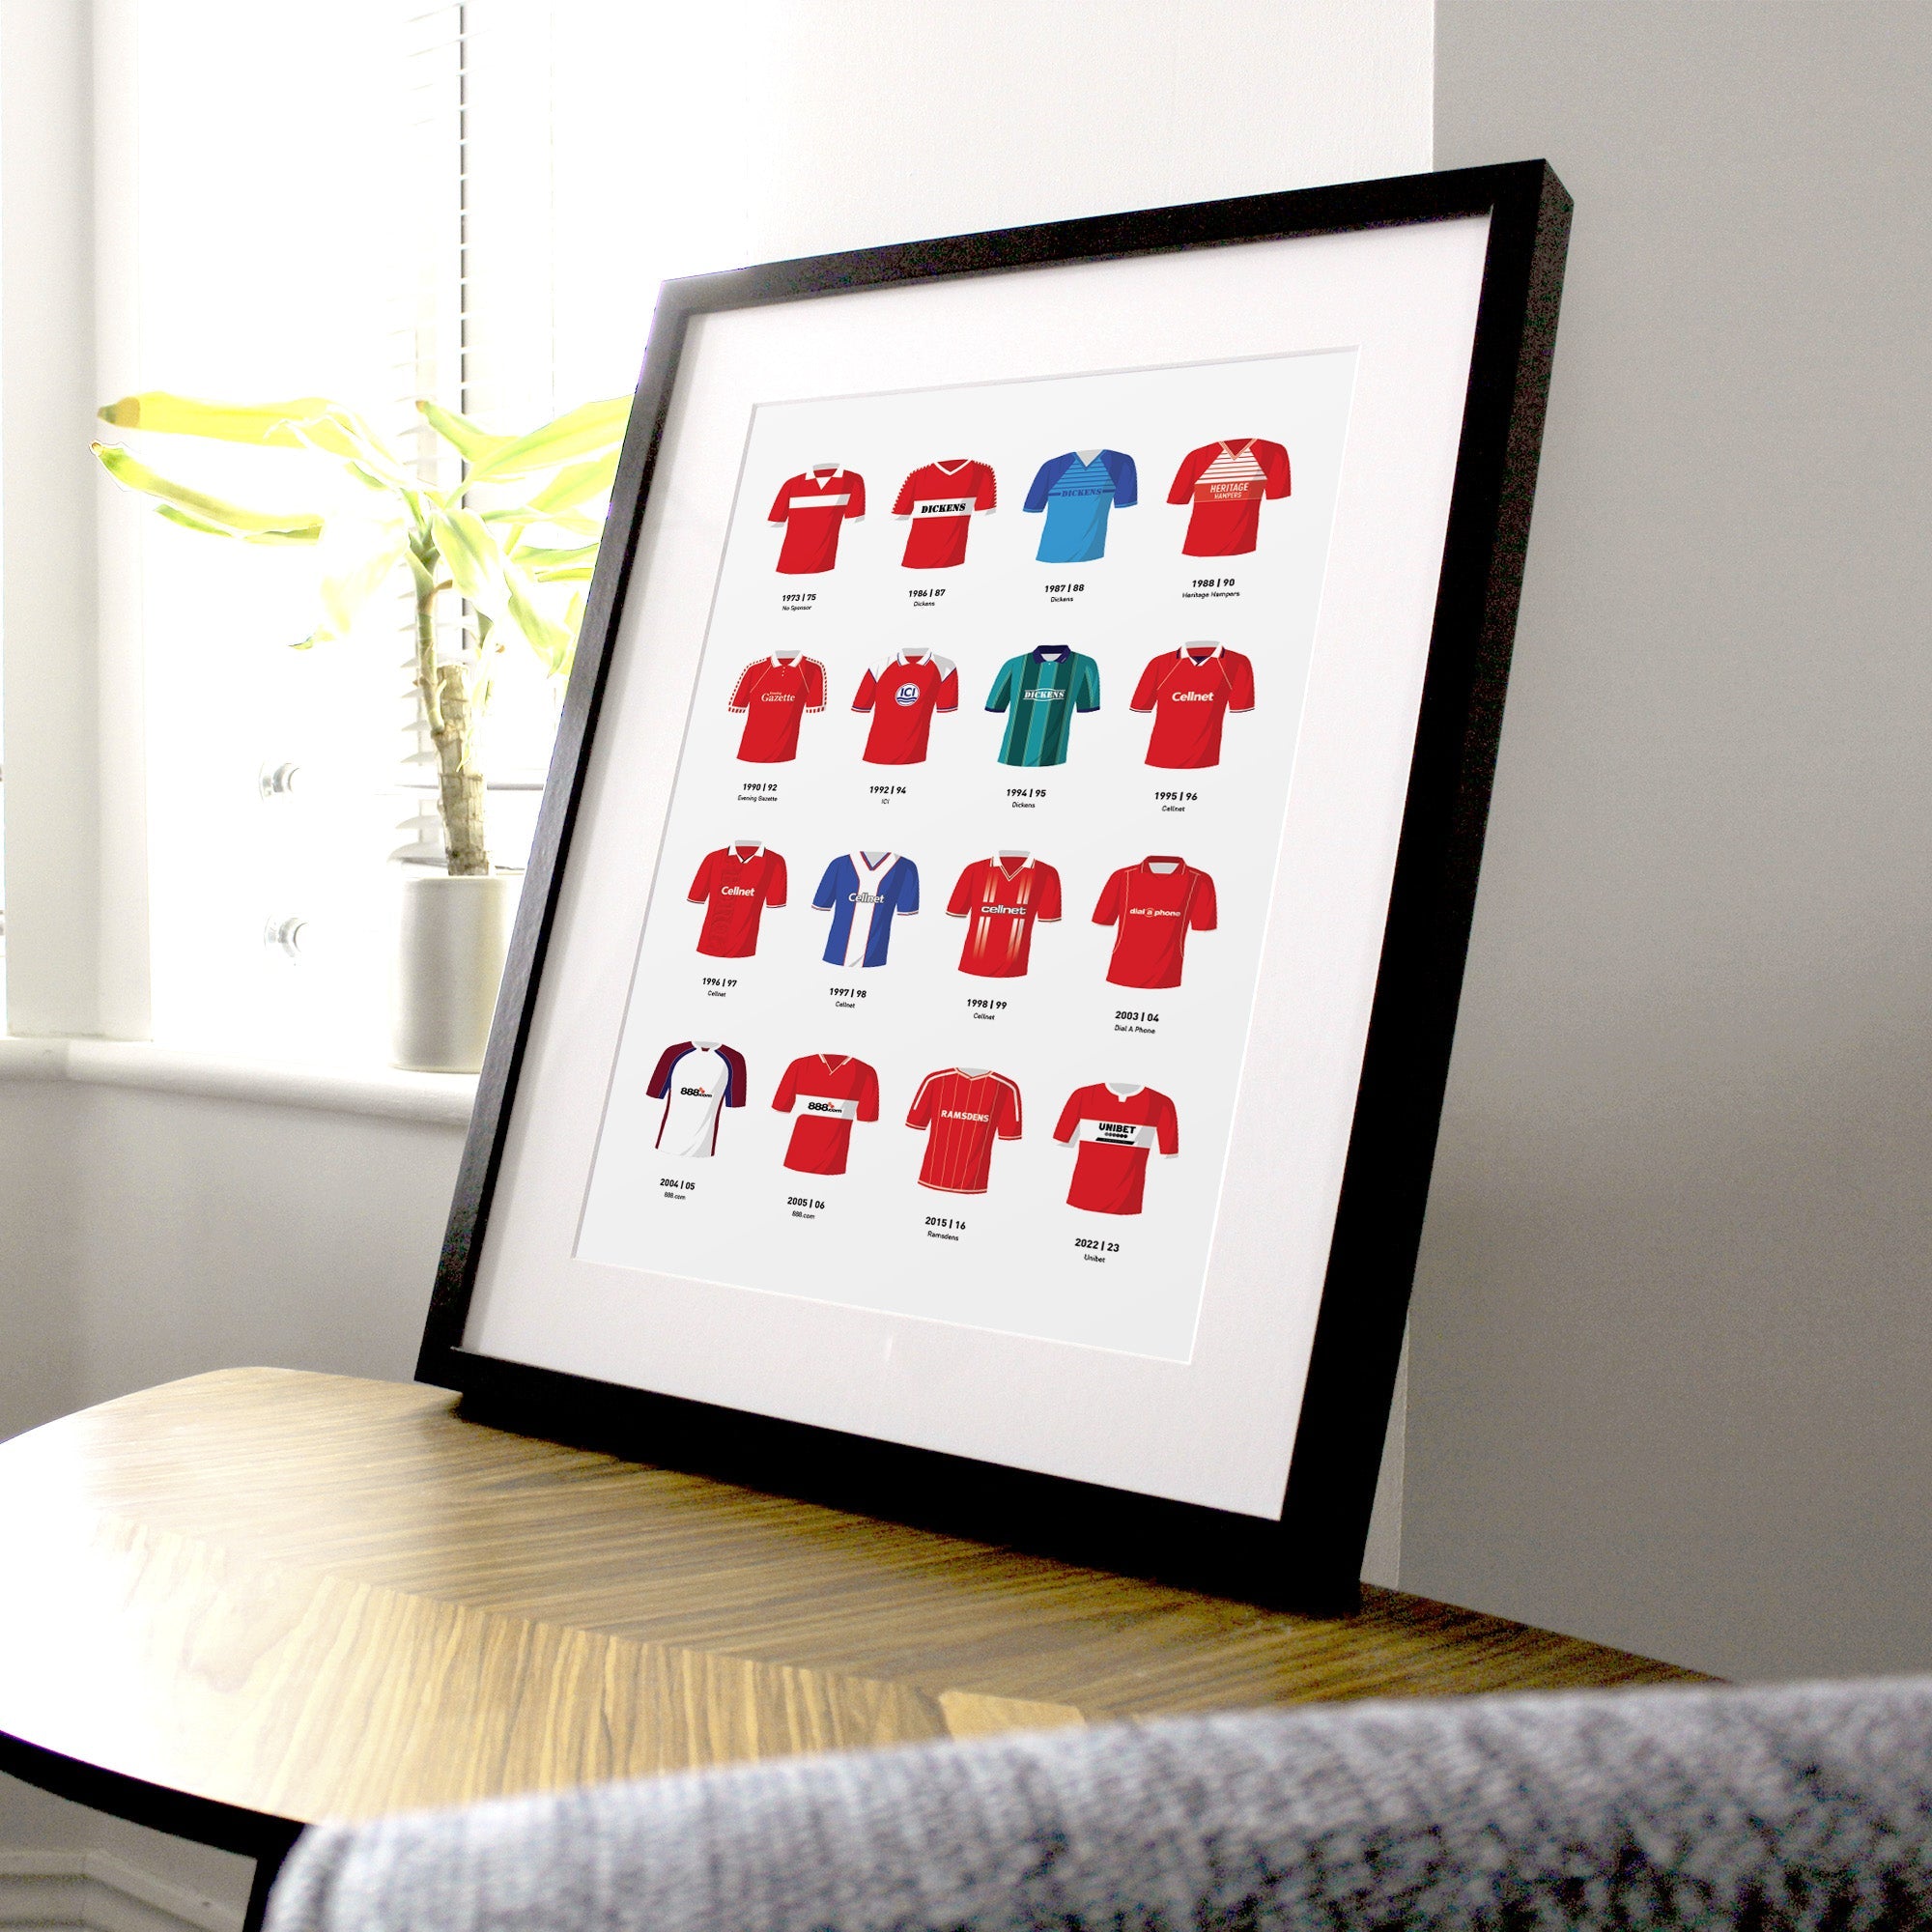 Middlesbrough Classic Kits Football Team Print Good Team On Paper